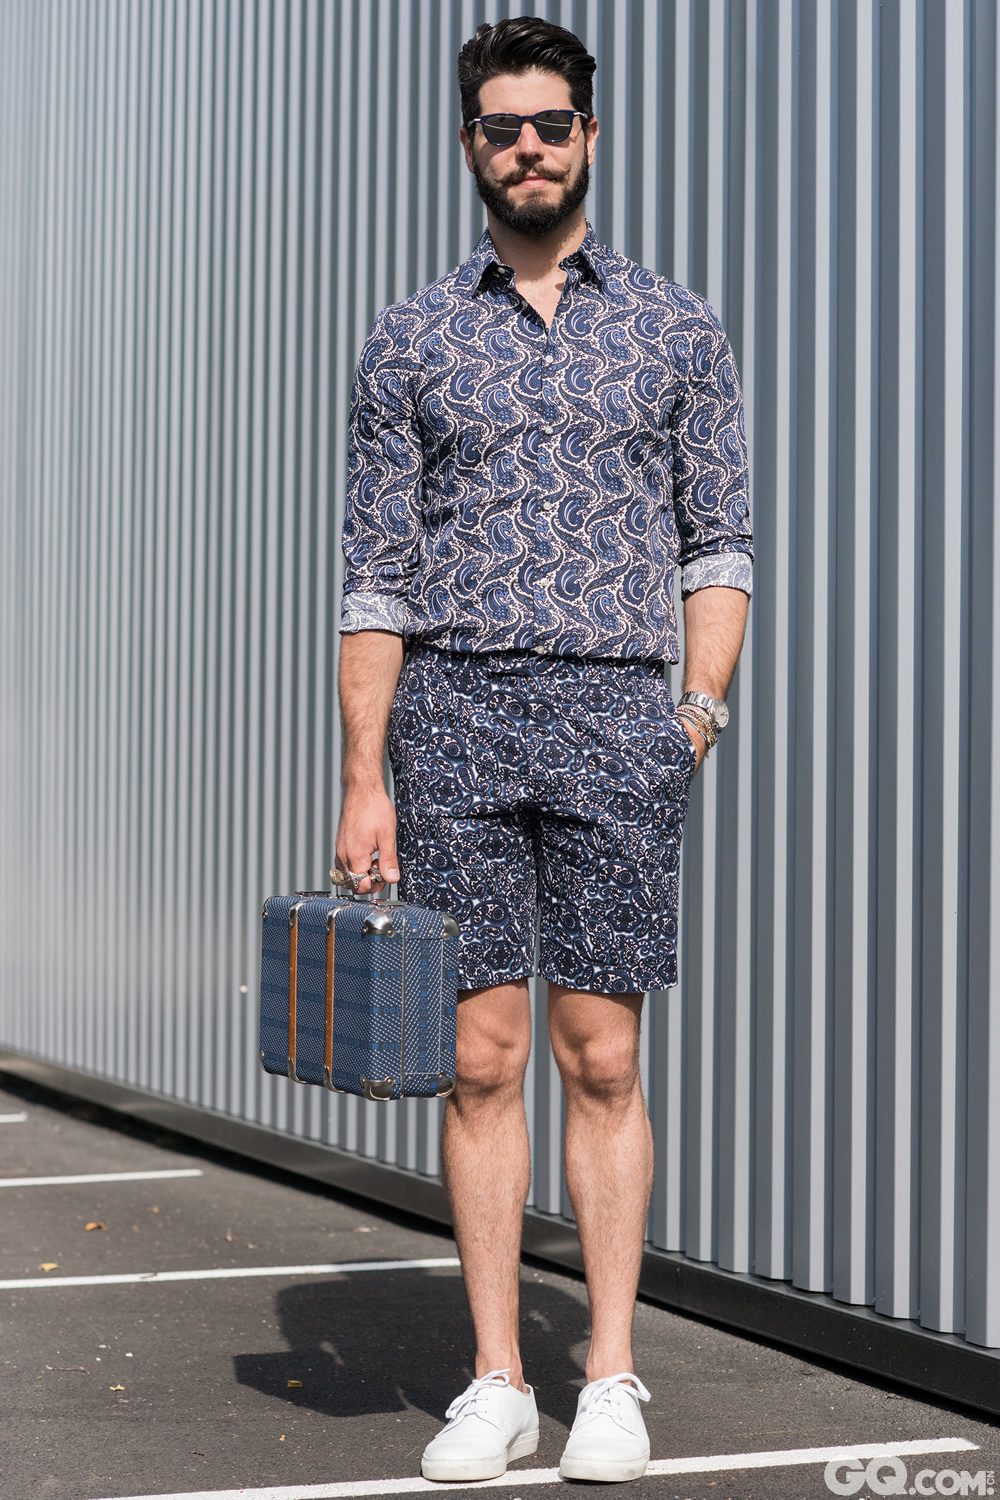 Kadu
Sunglasses: Dior
Shirt: H&M
Shorts: H&M
Shoes: Cos
Bag: Merci
Watch: Cartier

Inspiration: Classic-Summer-Paisley is what got in my mind this morning 
（经典夏日佩斯利是我今天早晨脑海中的灵感）